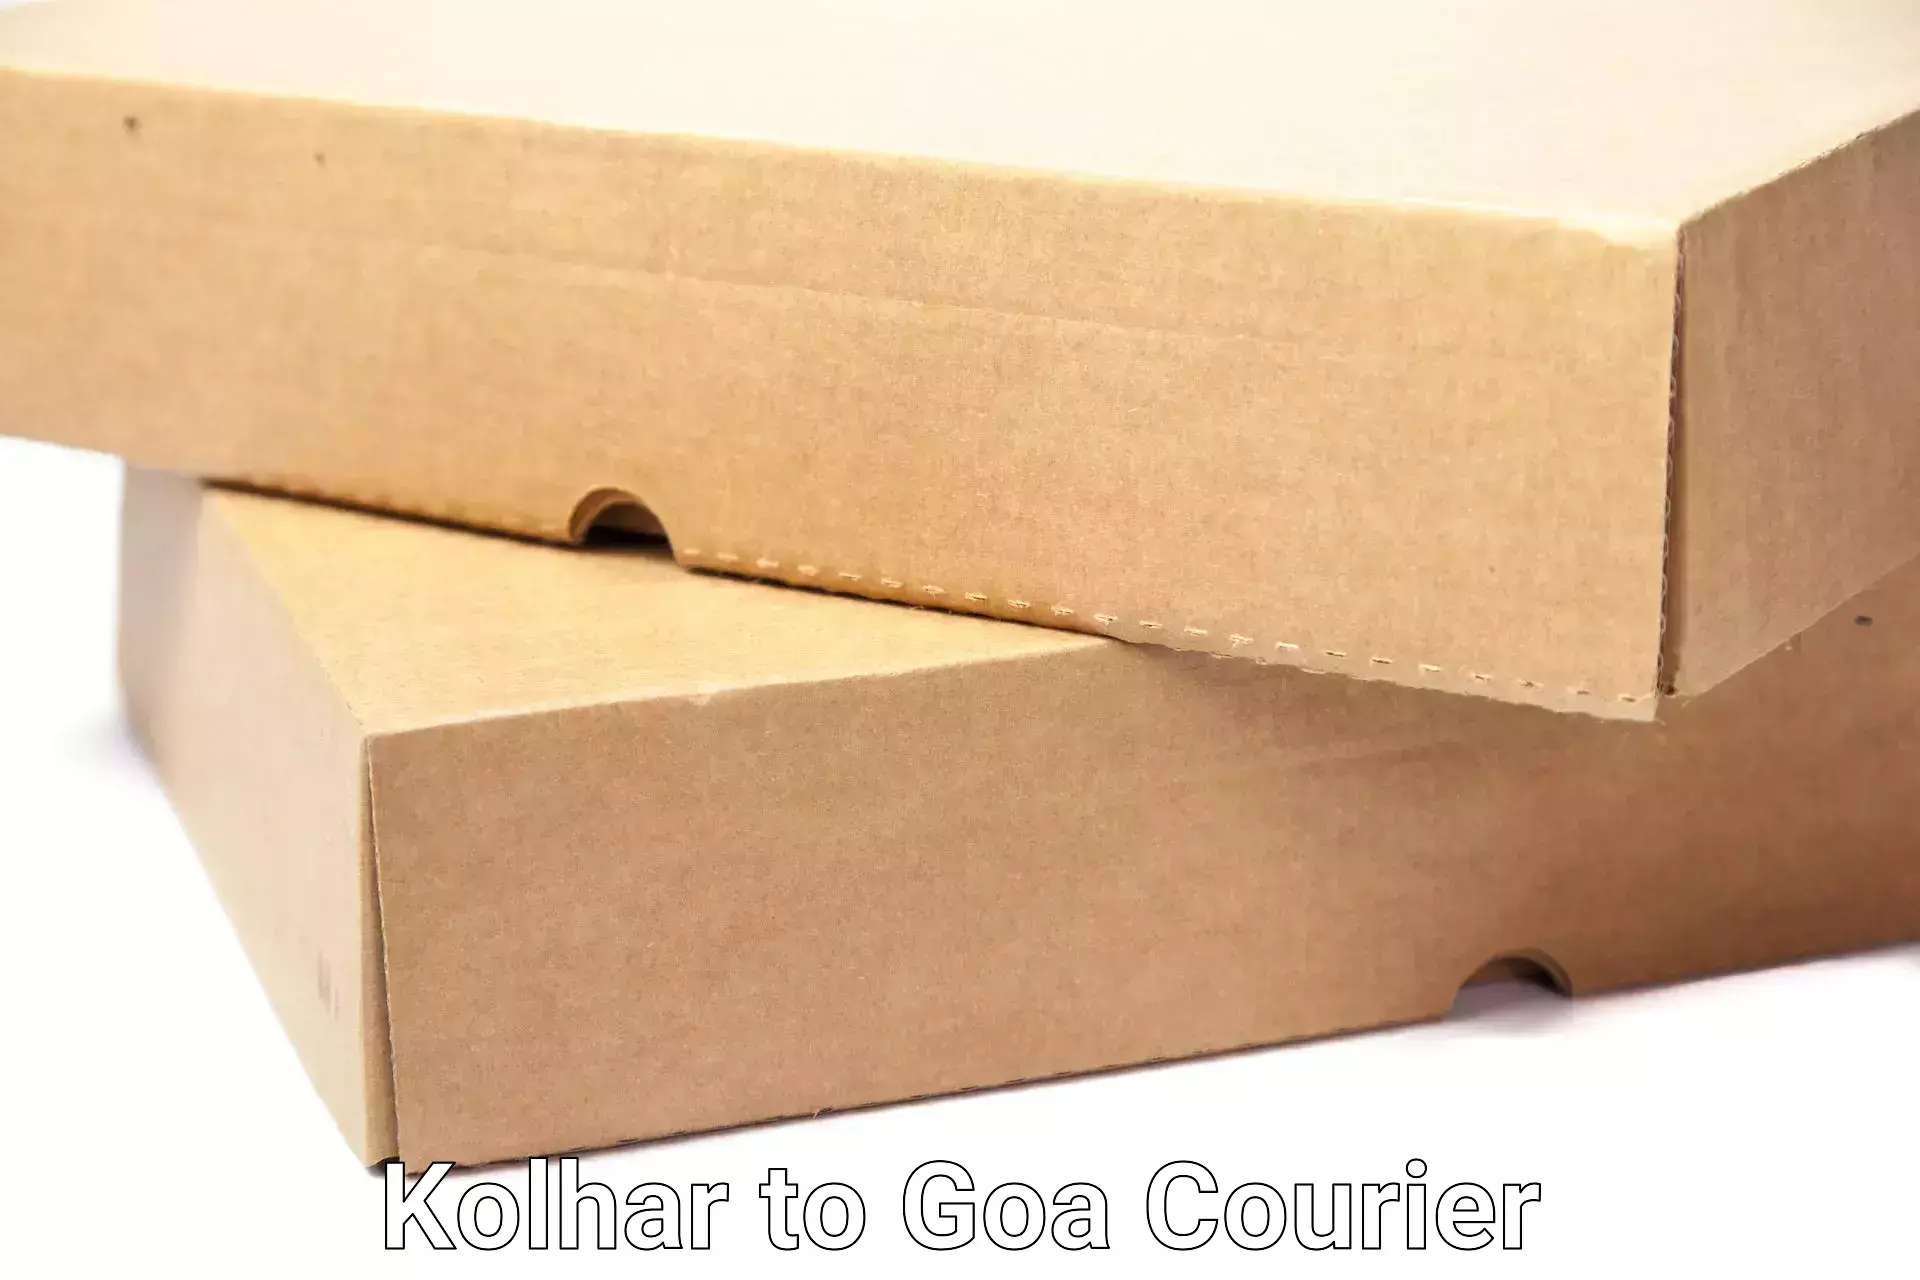 Full-service movers Kolhar to Goa